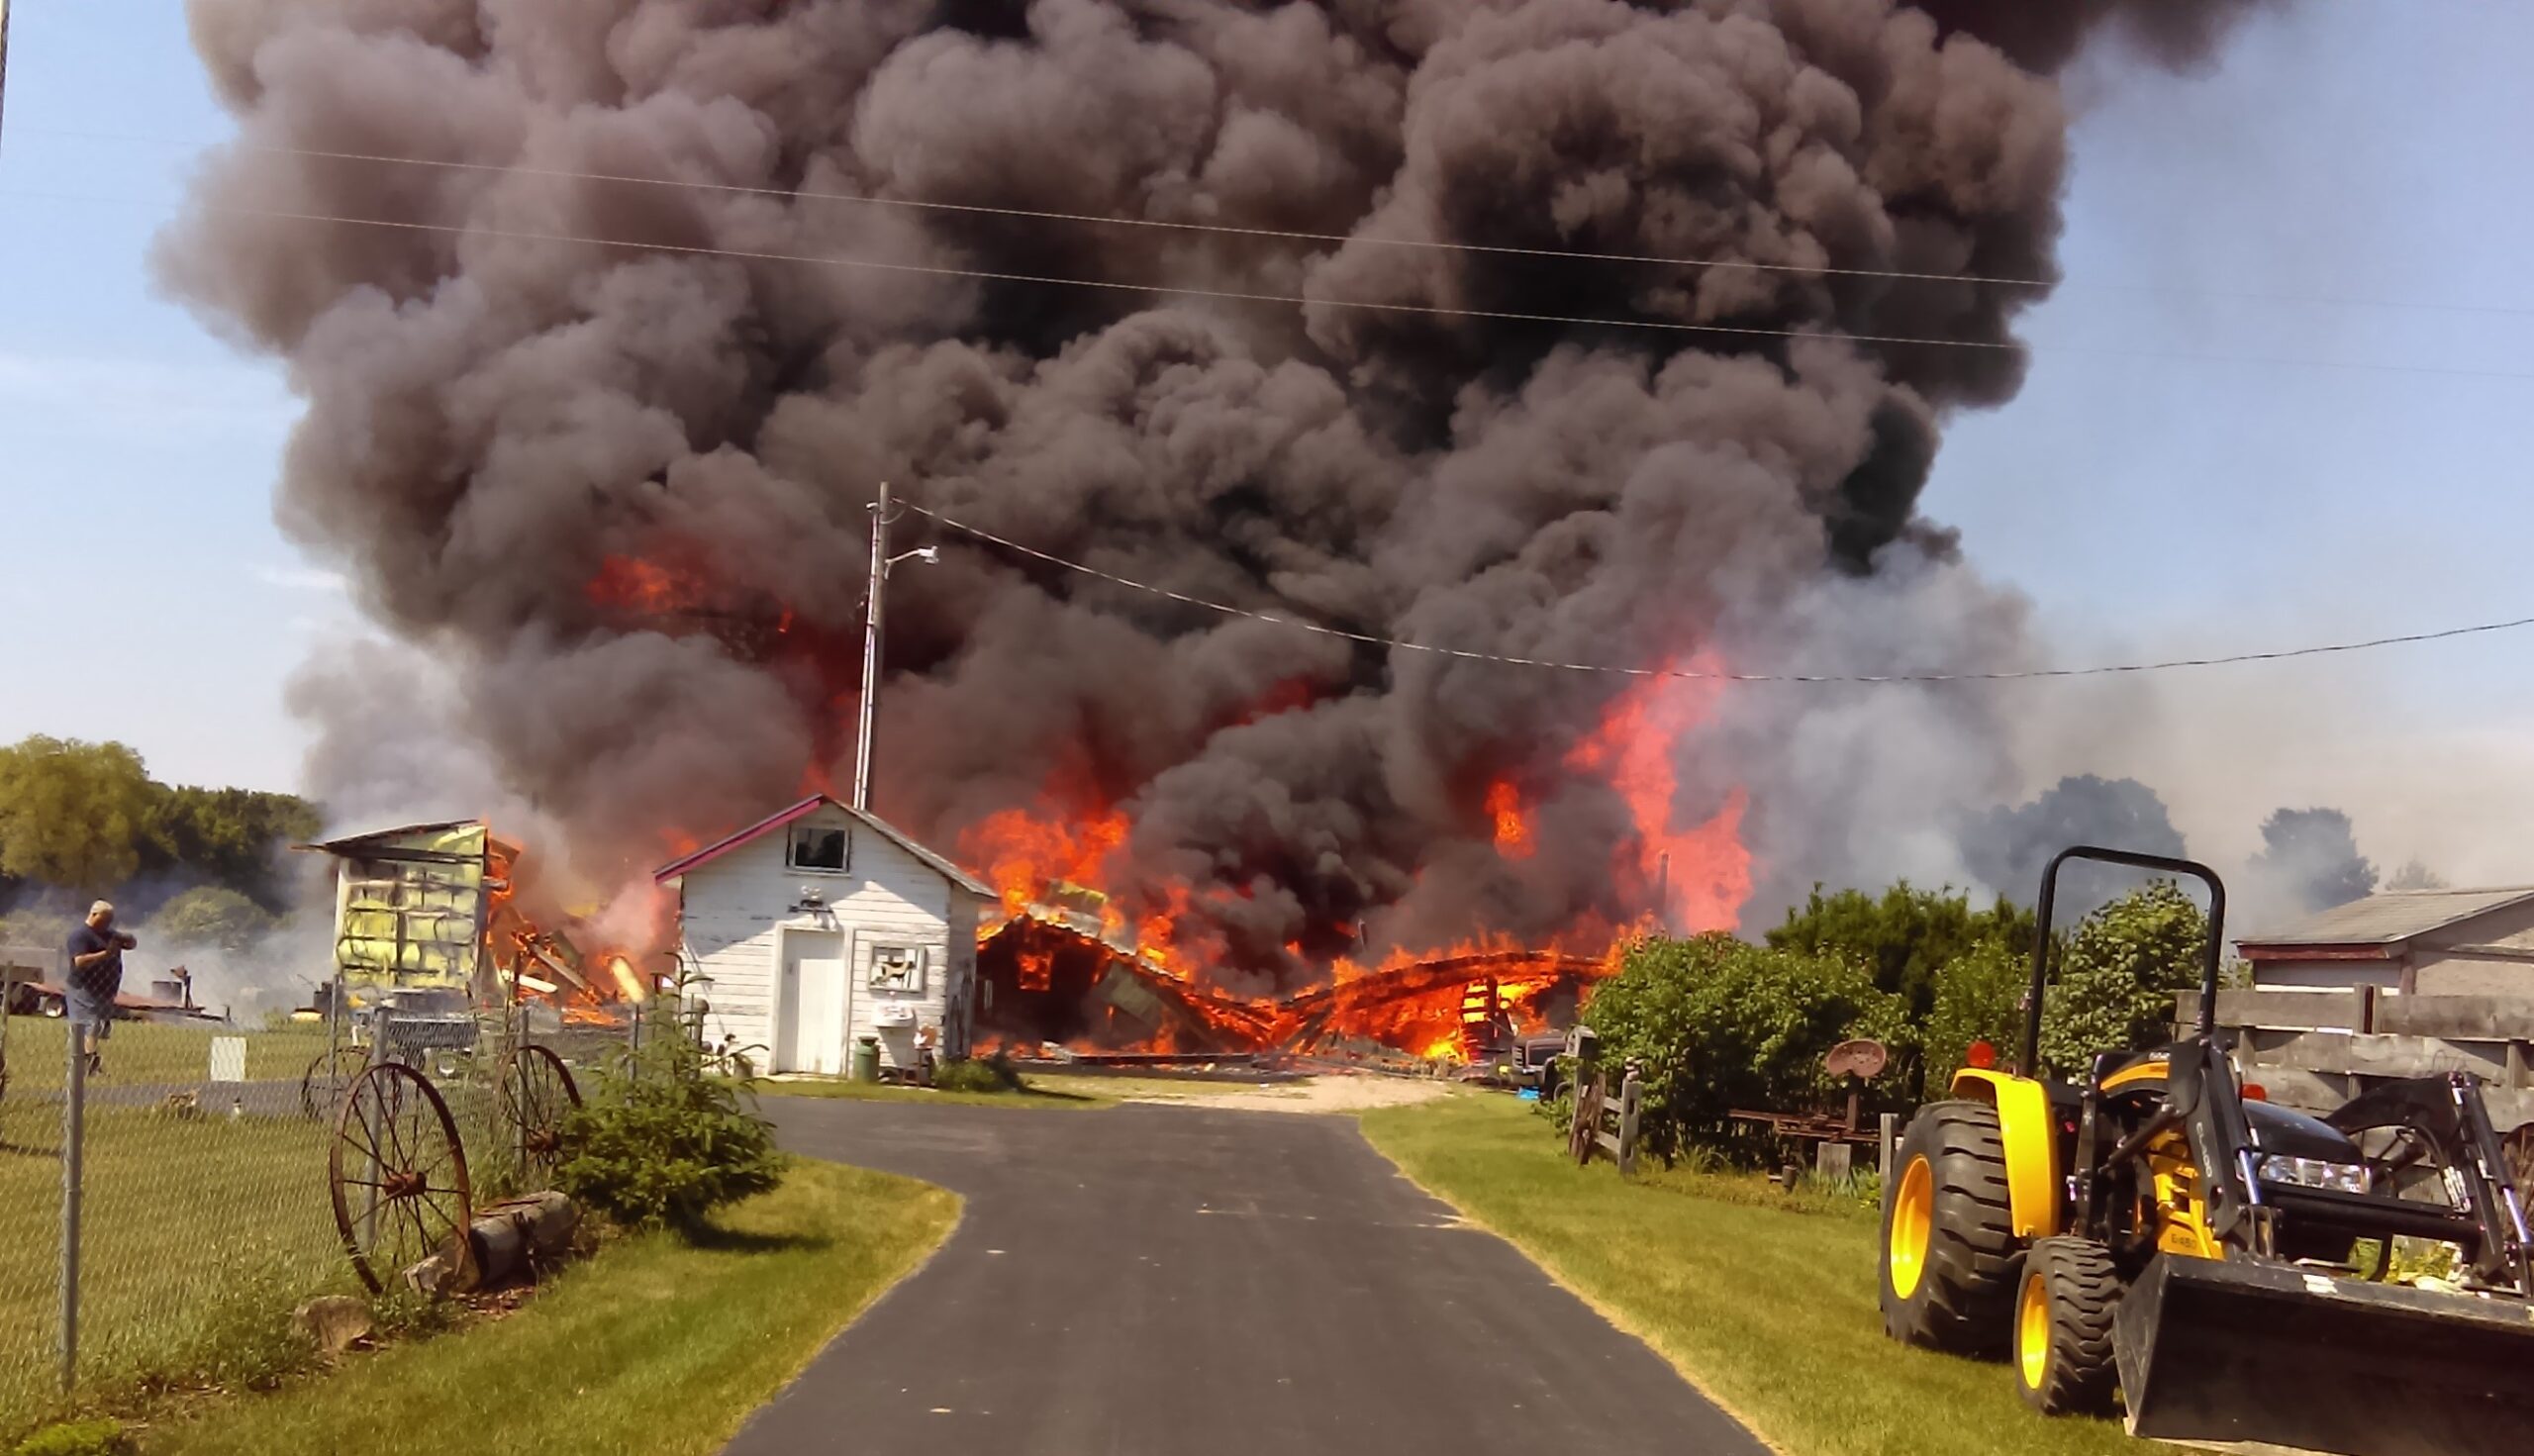 fire destroying old garage in Michigan